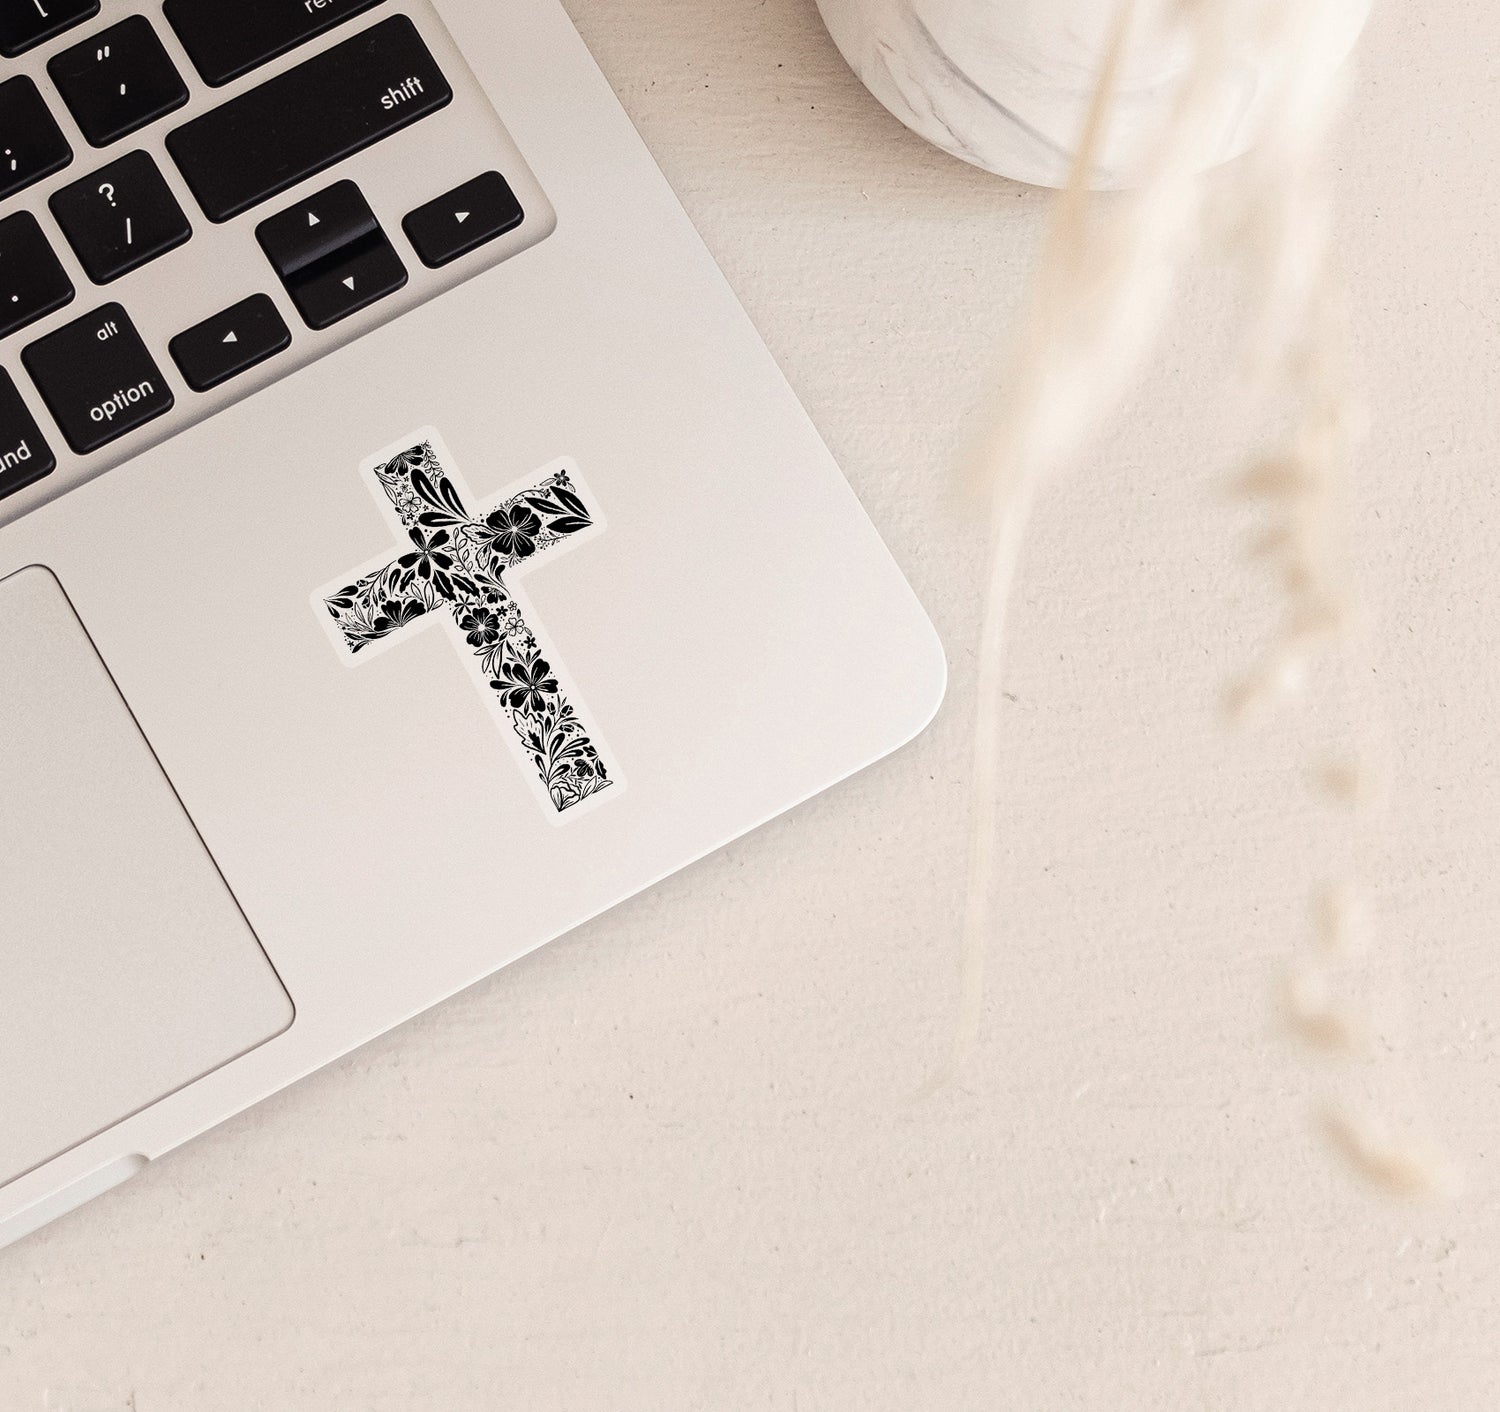 Christian cross laptop sticker